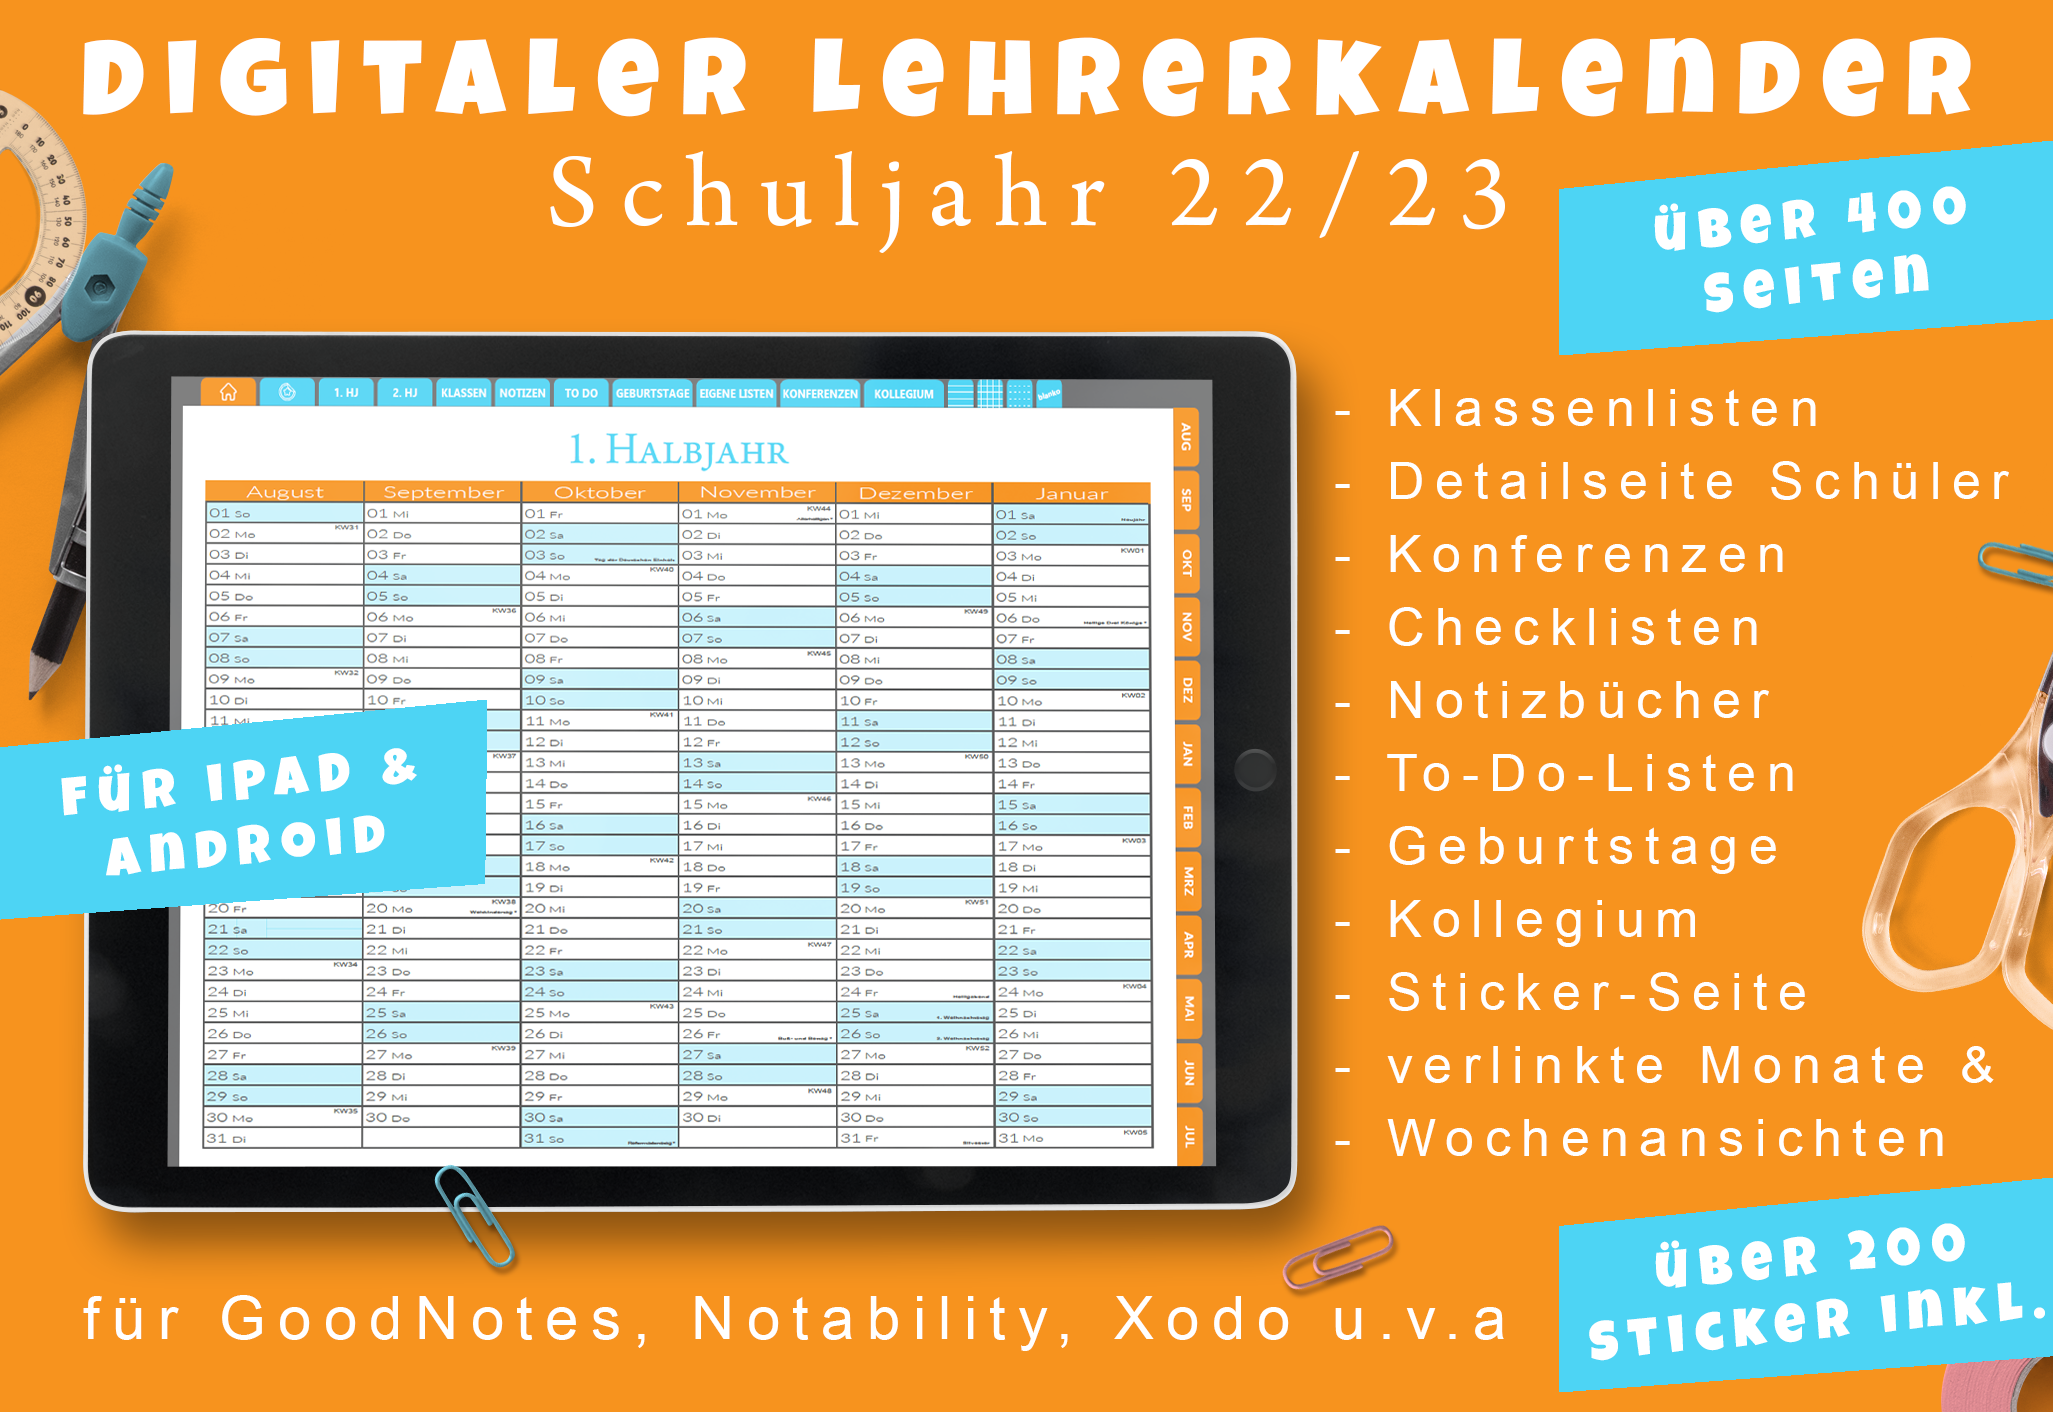 Vorschau digitaler Lehrerkalender 2022/23 GoodNotes